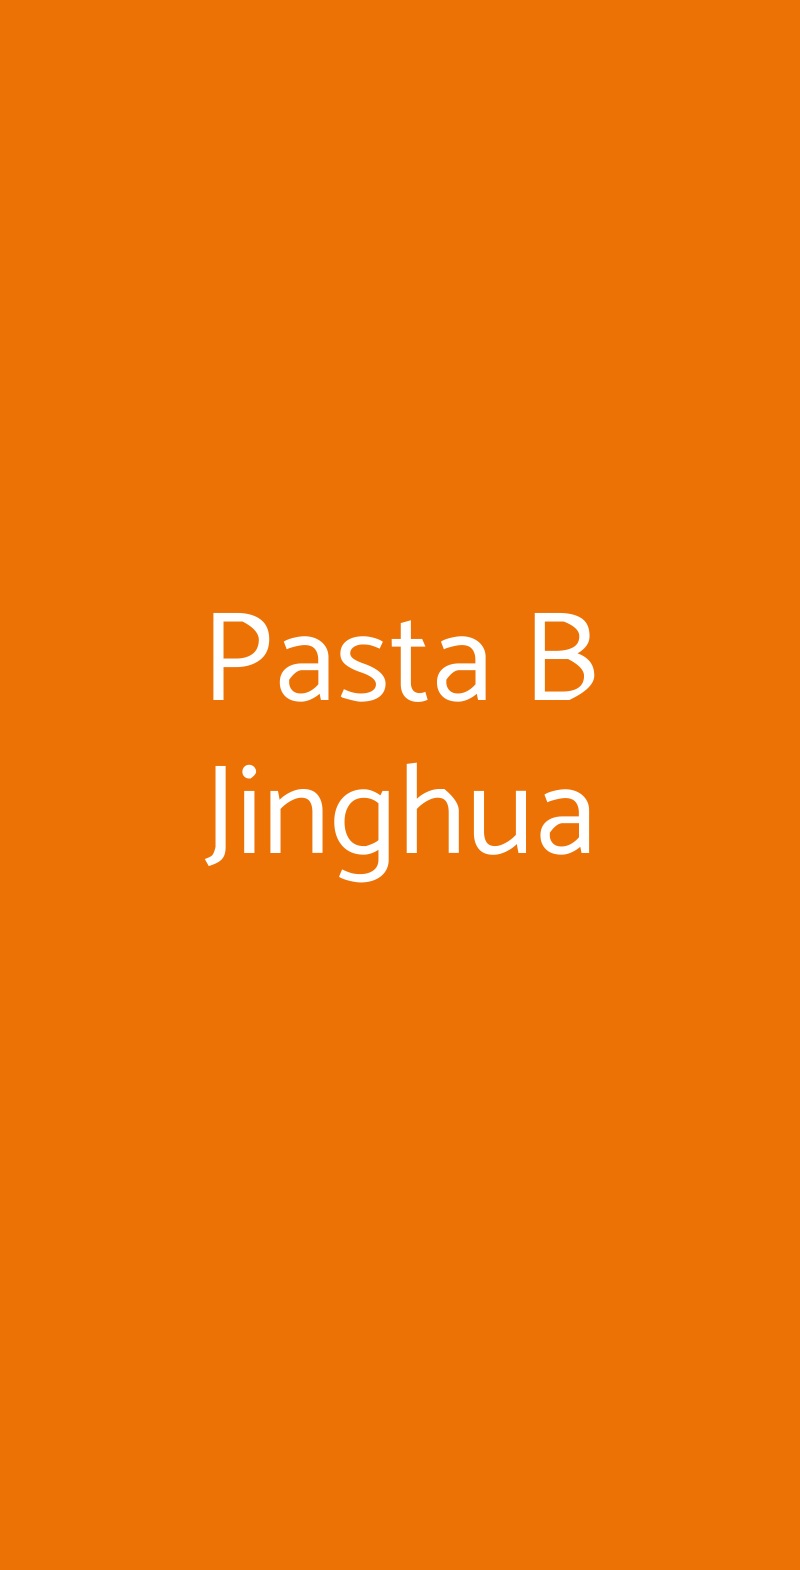 Pasta B Jinghua Milano menù 1 pagina